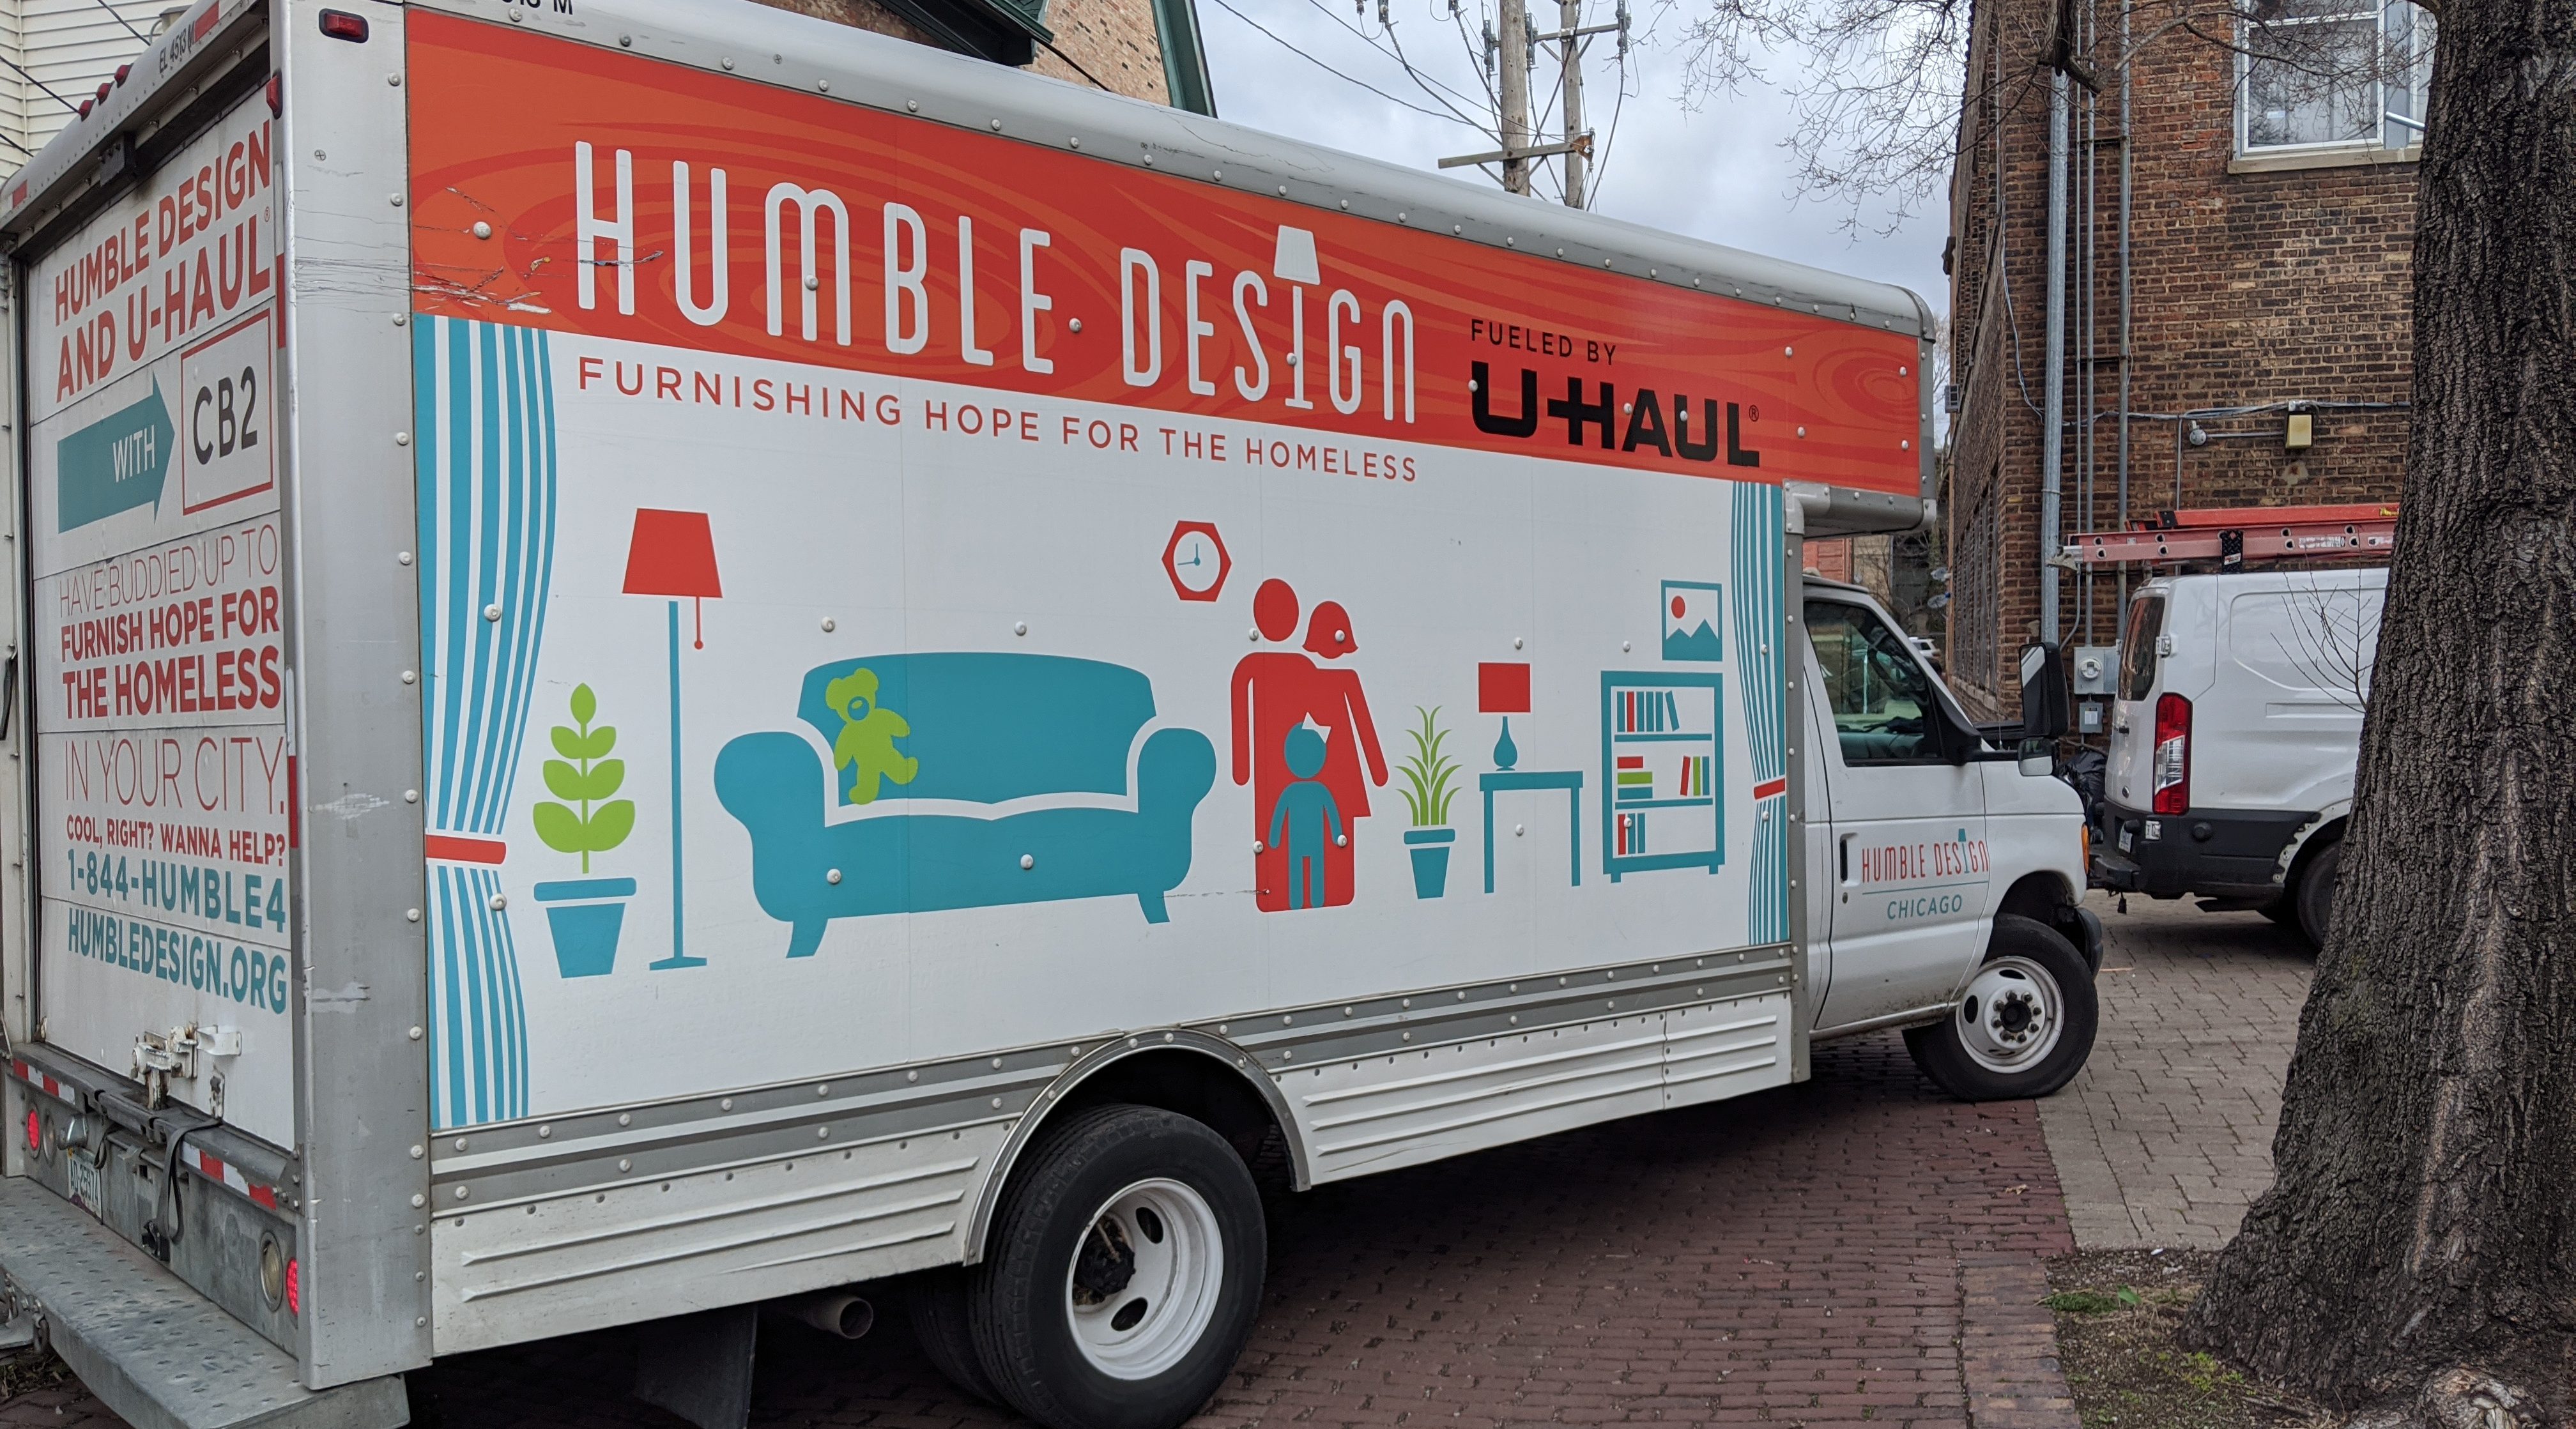 Humble Design, U-Haul Charity Partner, Expands Mission amid COVID-19